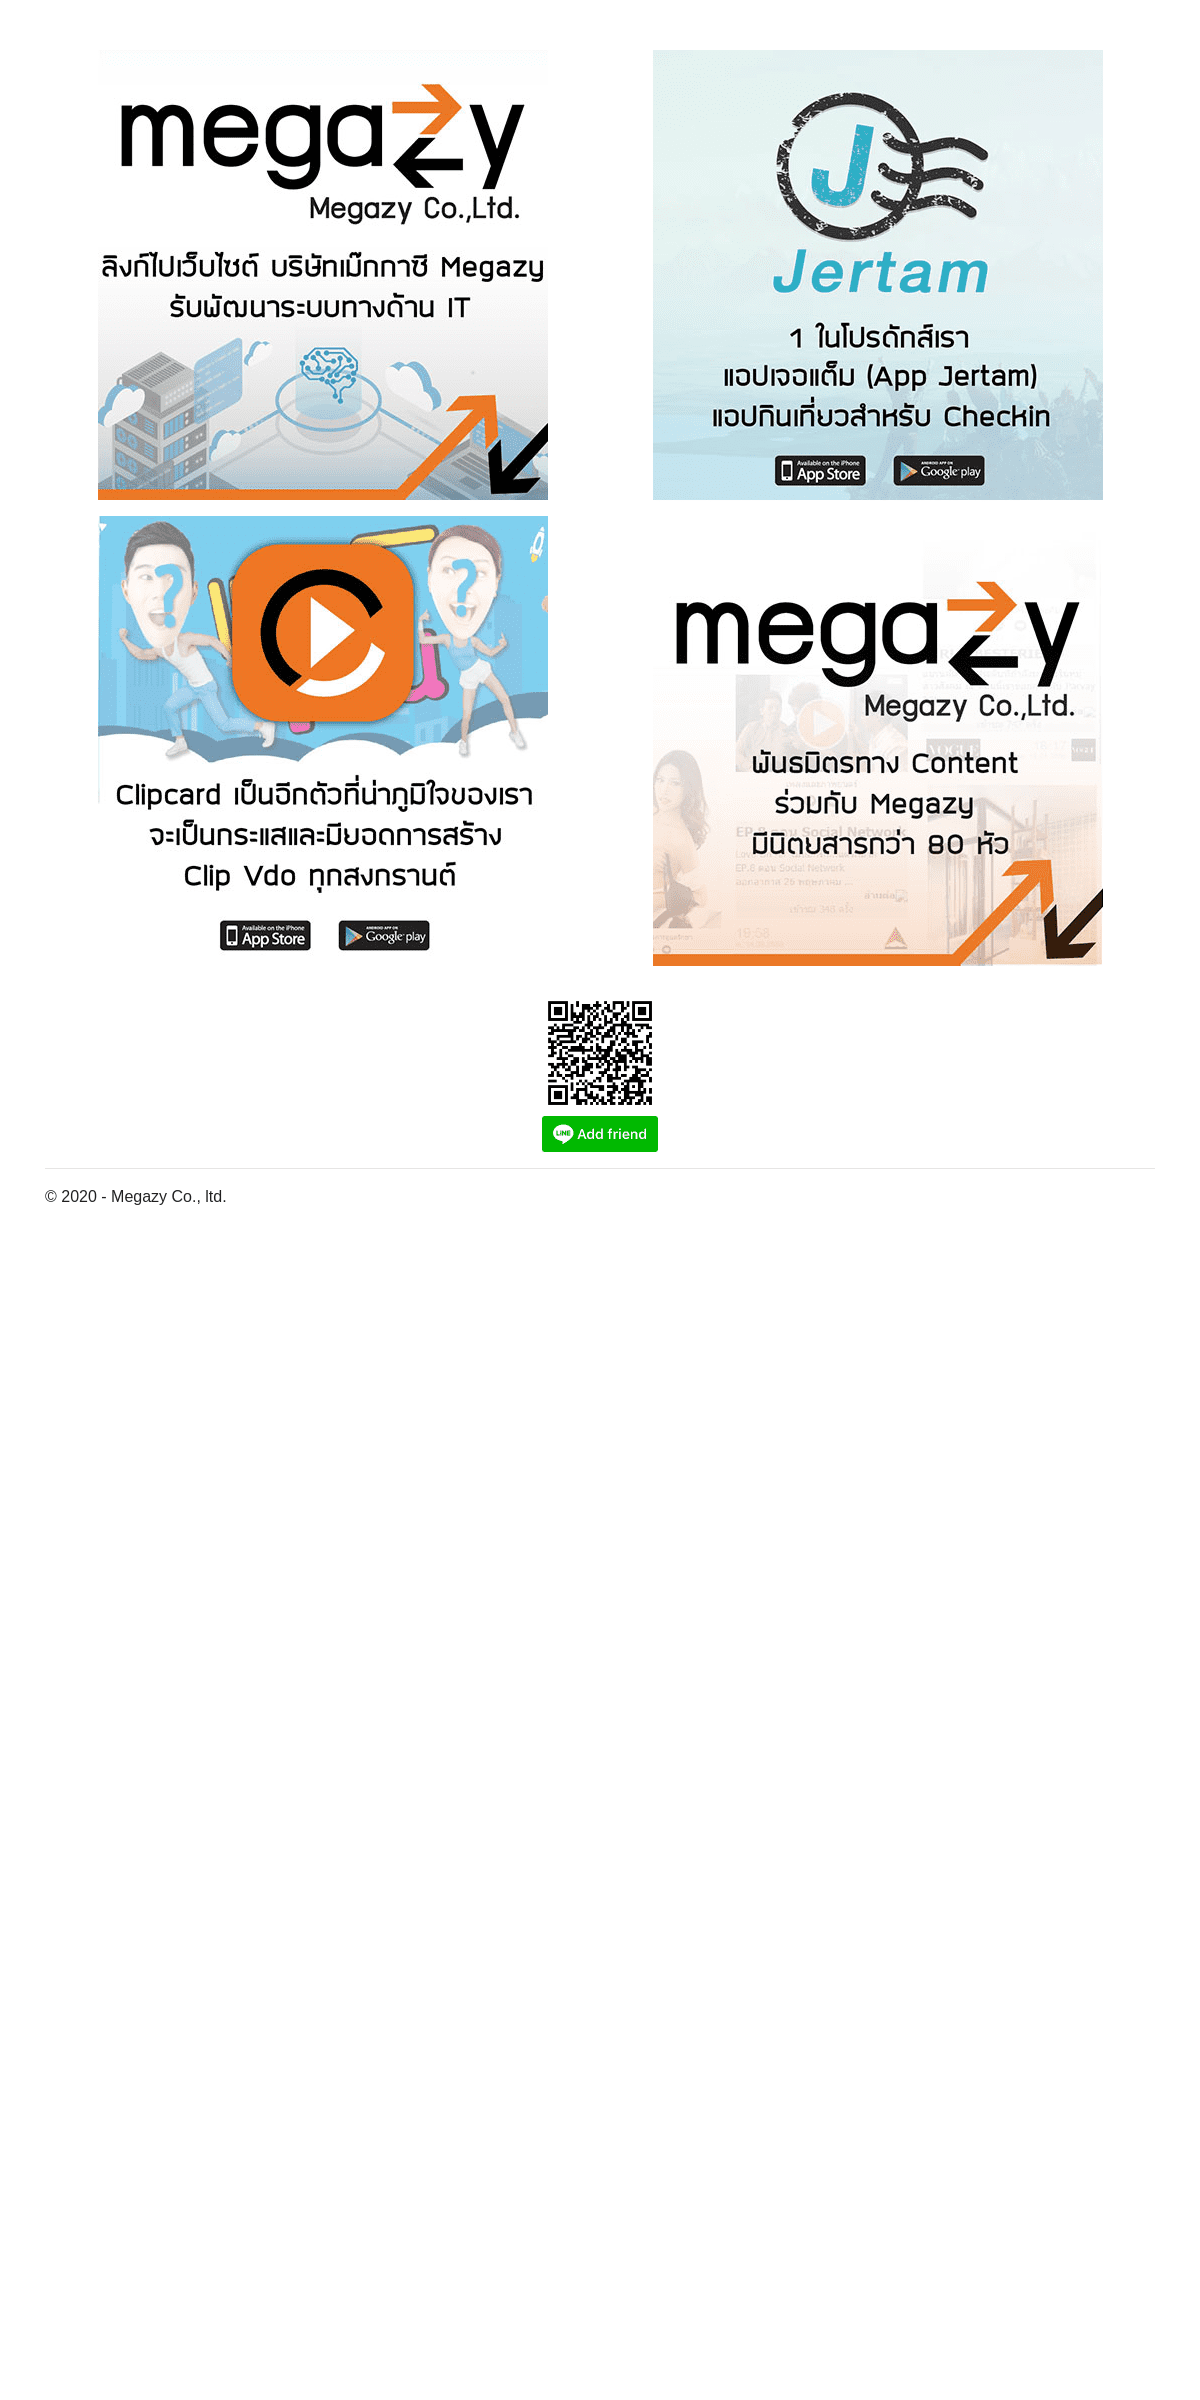 A complete backup of megazy.com